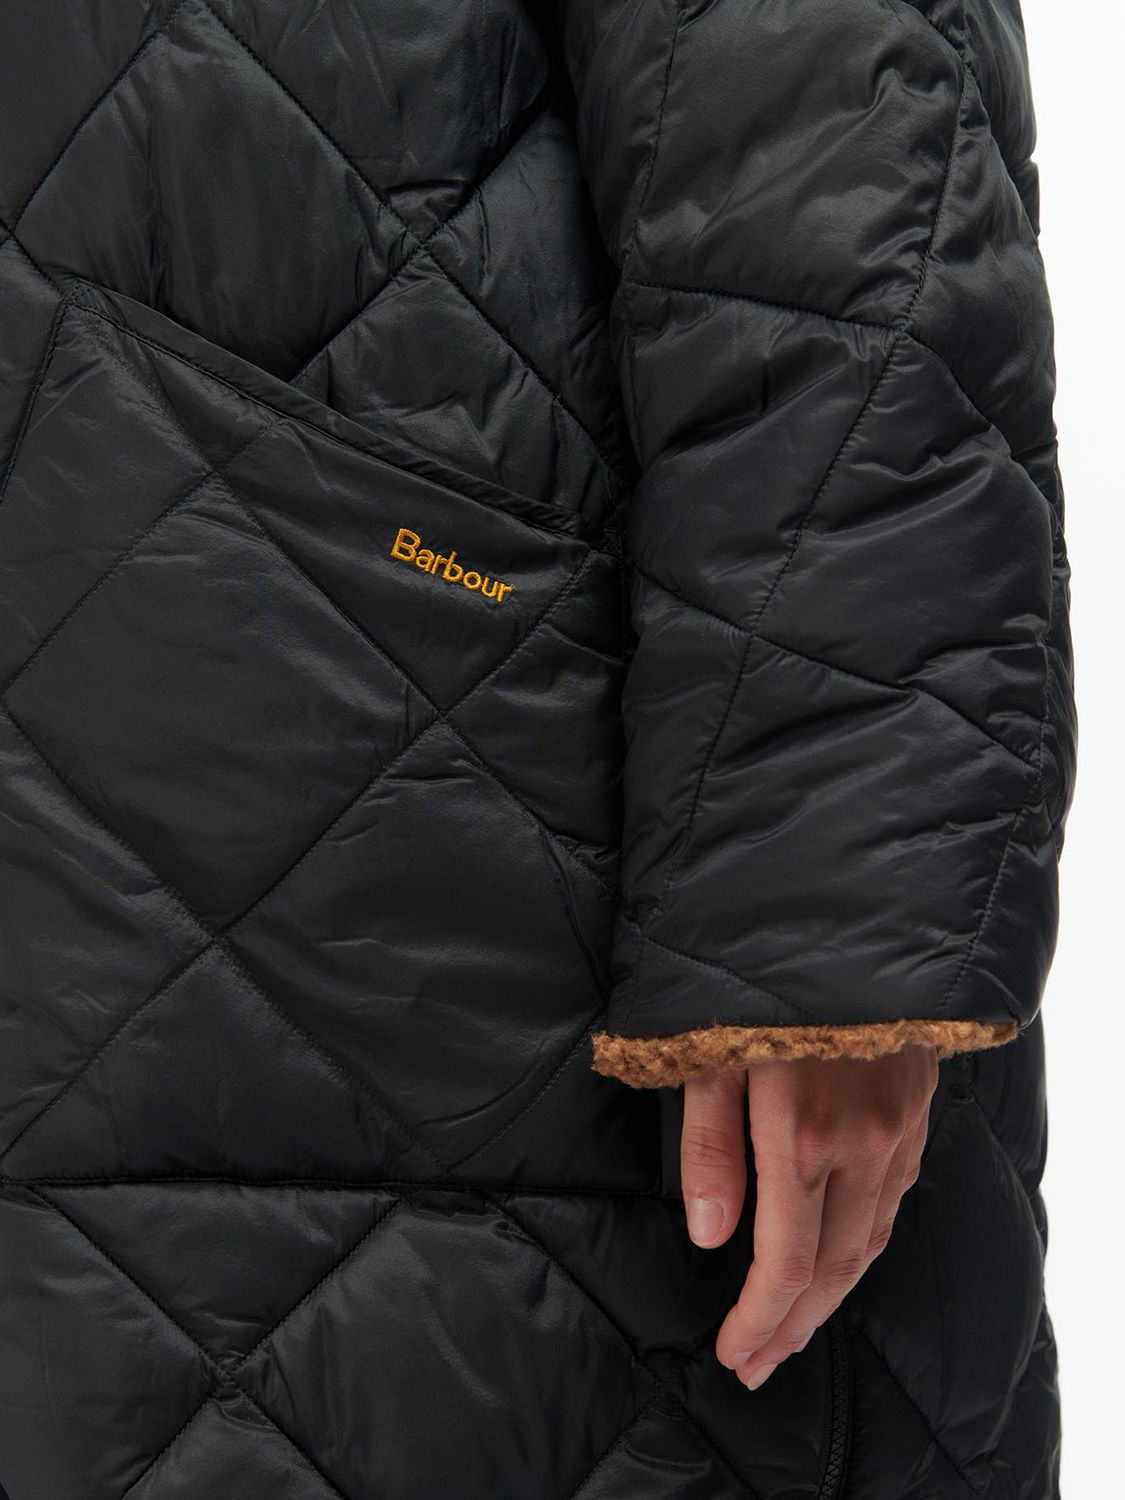 Barbour Portellen Long Quilted Hooded Coat, Black/Ancient Tartan, 8